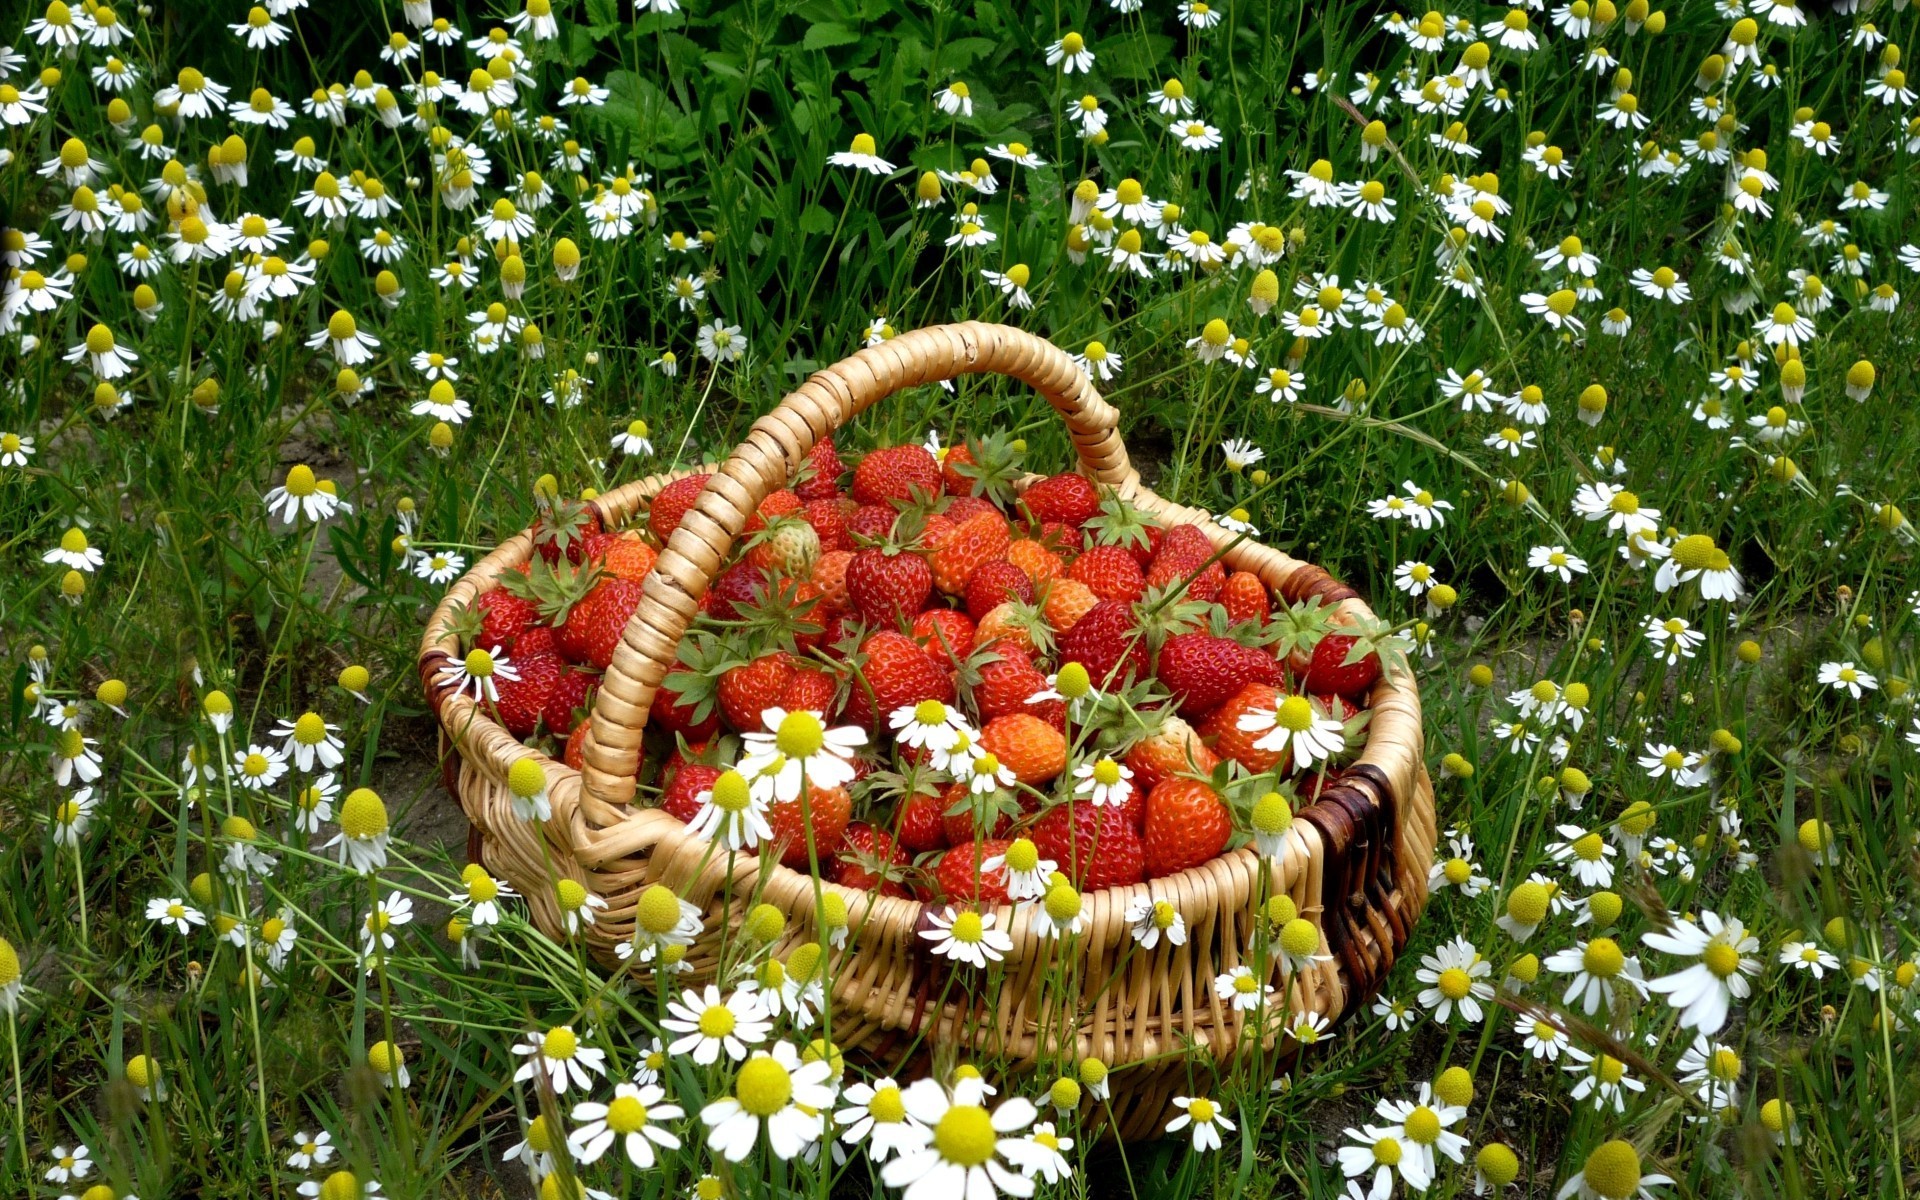 white flower, strawberry, still life, food, basket, daisy, nature, fruits